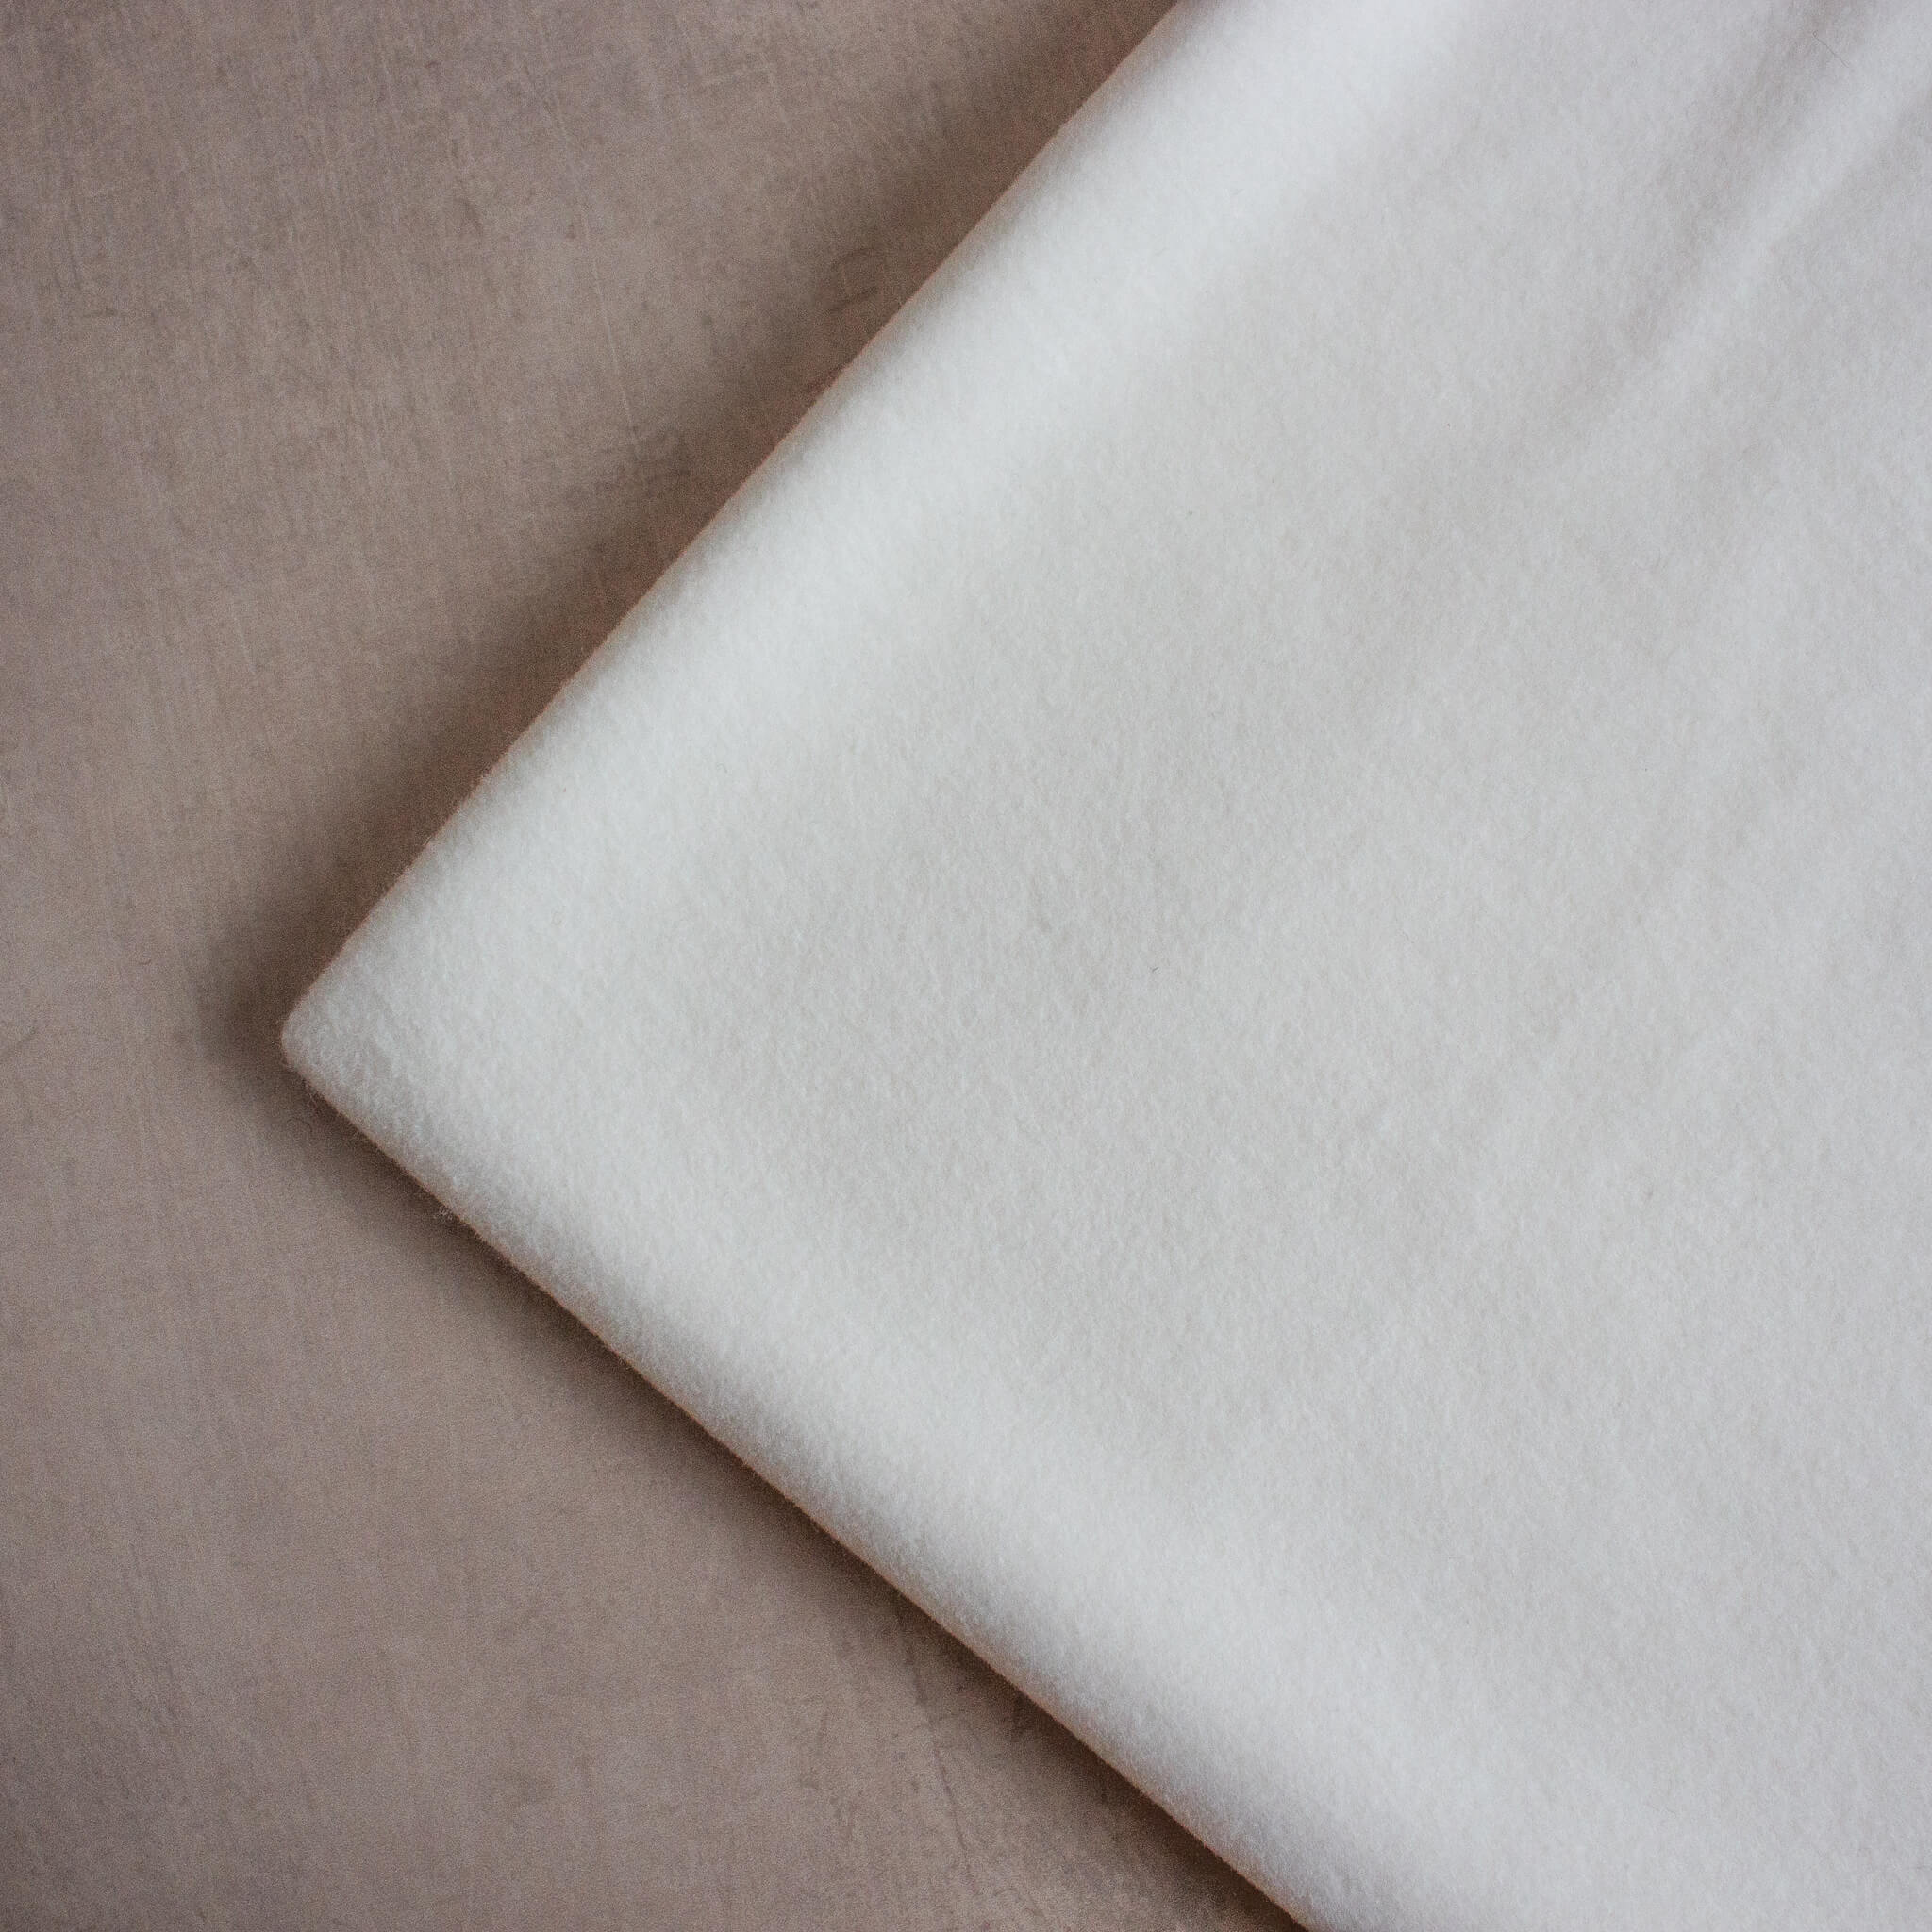 Remnant - Organic Cotton Fleece Fabric in Ecru 0.58m